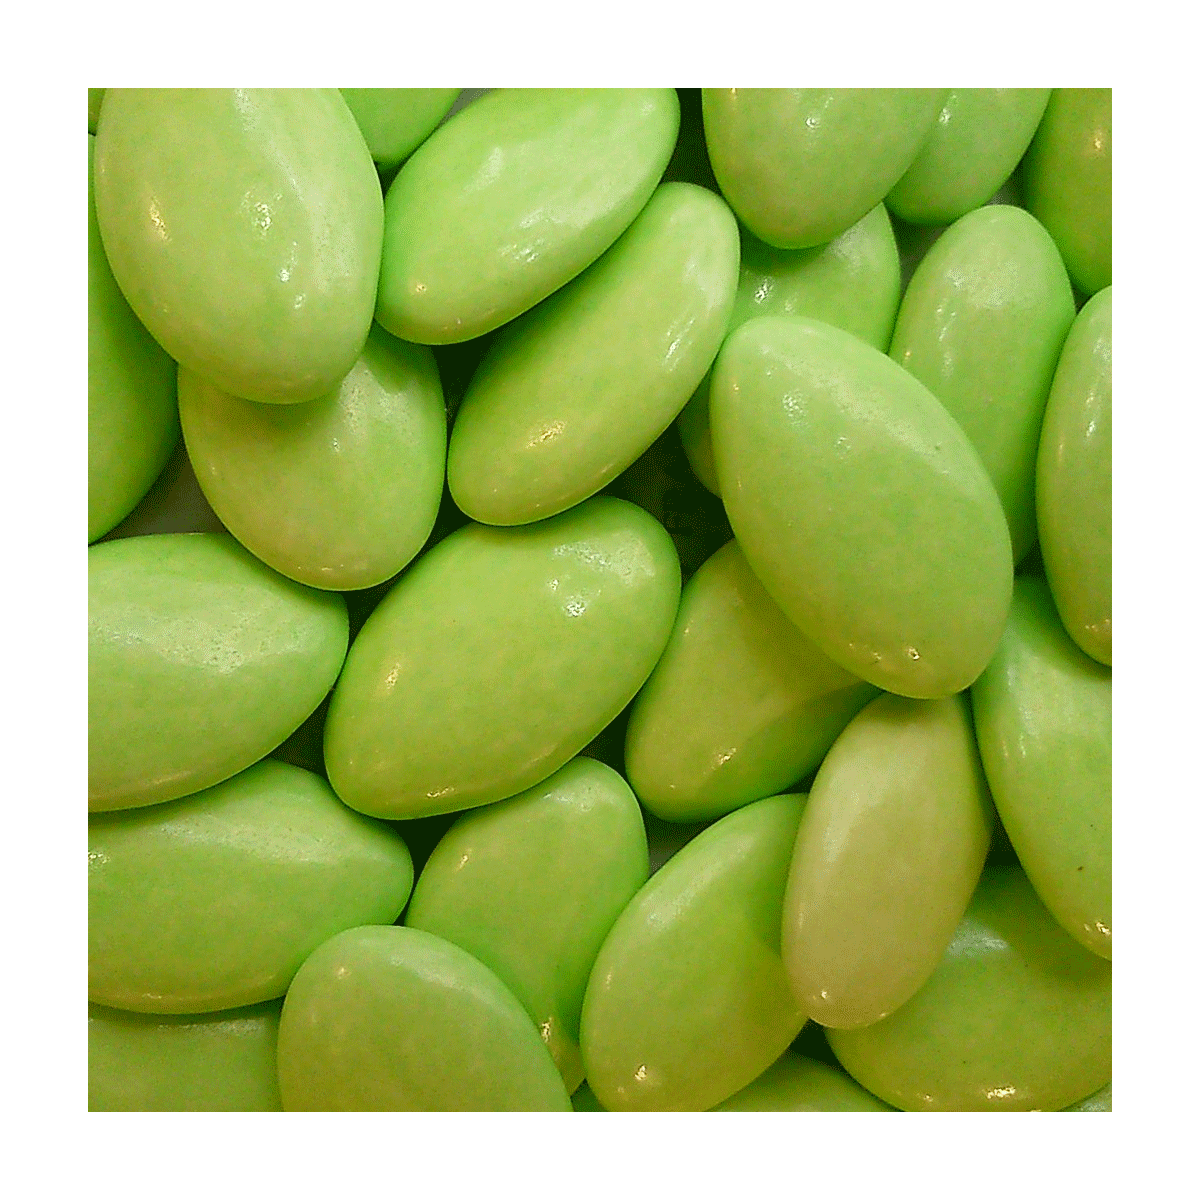 1kg Dragées Pecou avola extra - Vert anis